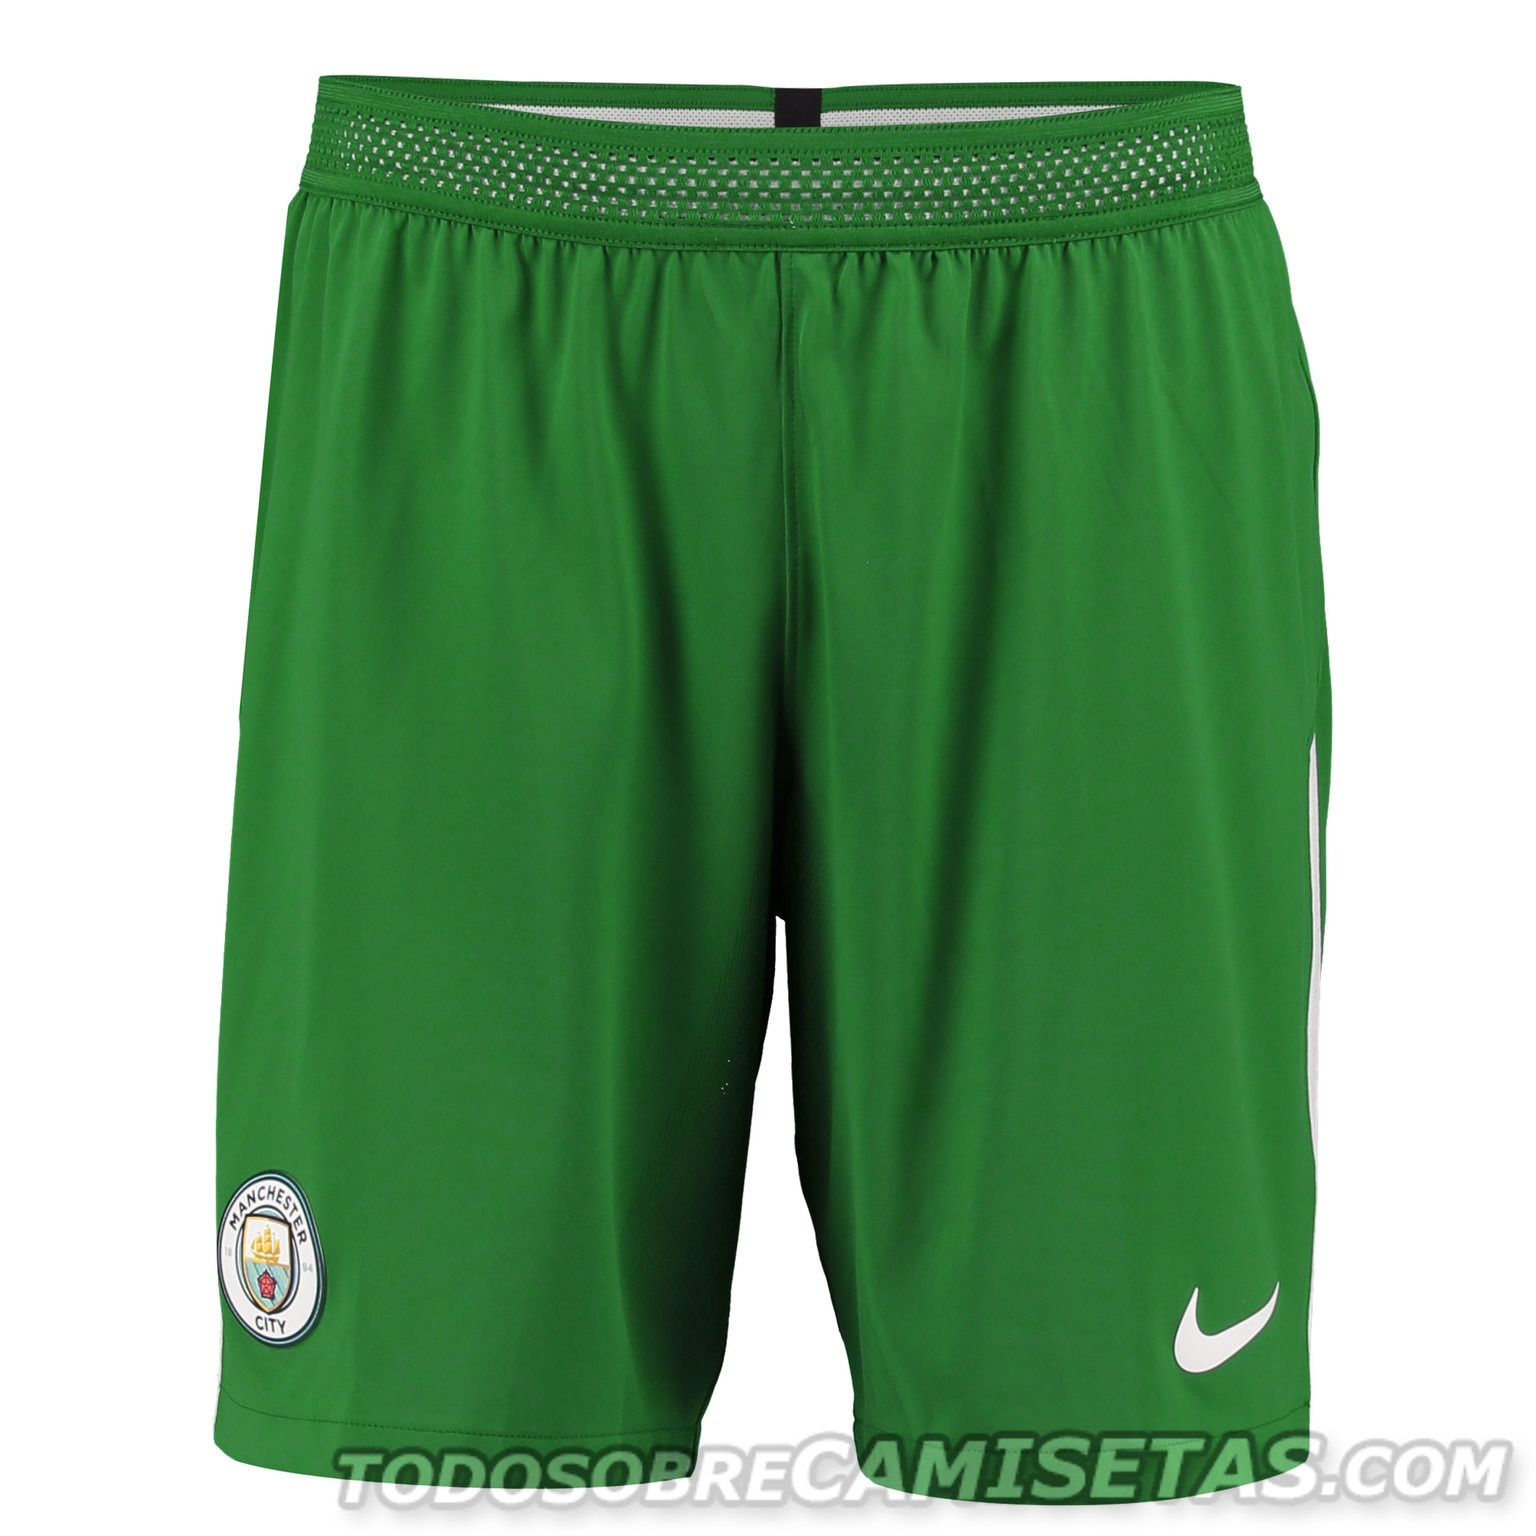 Manchester City 2017-18 Nike Away Kit